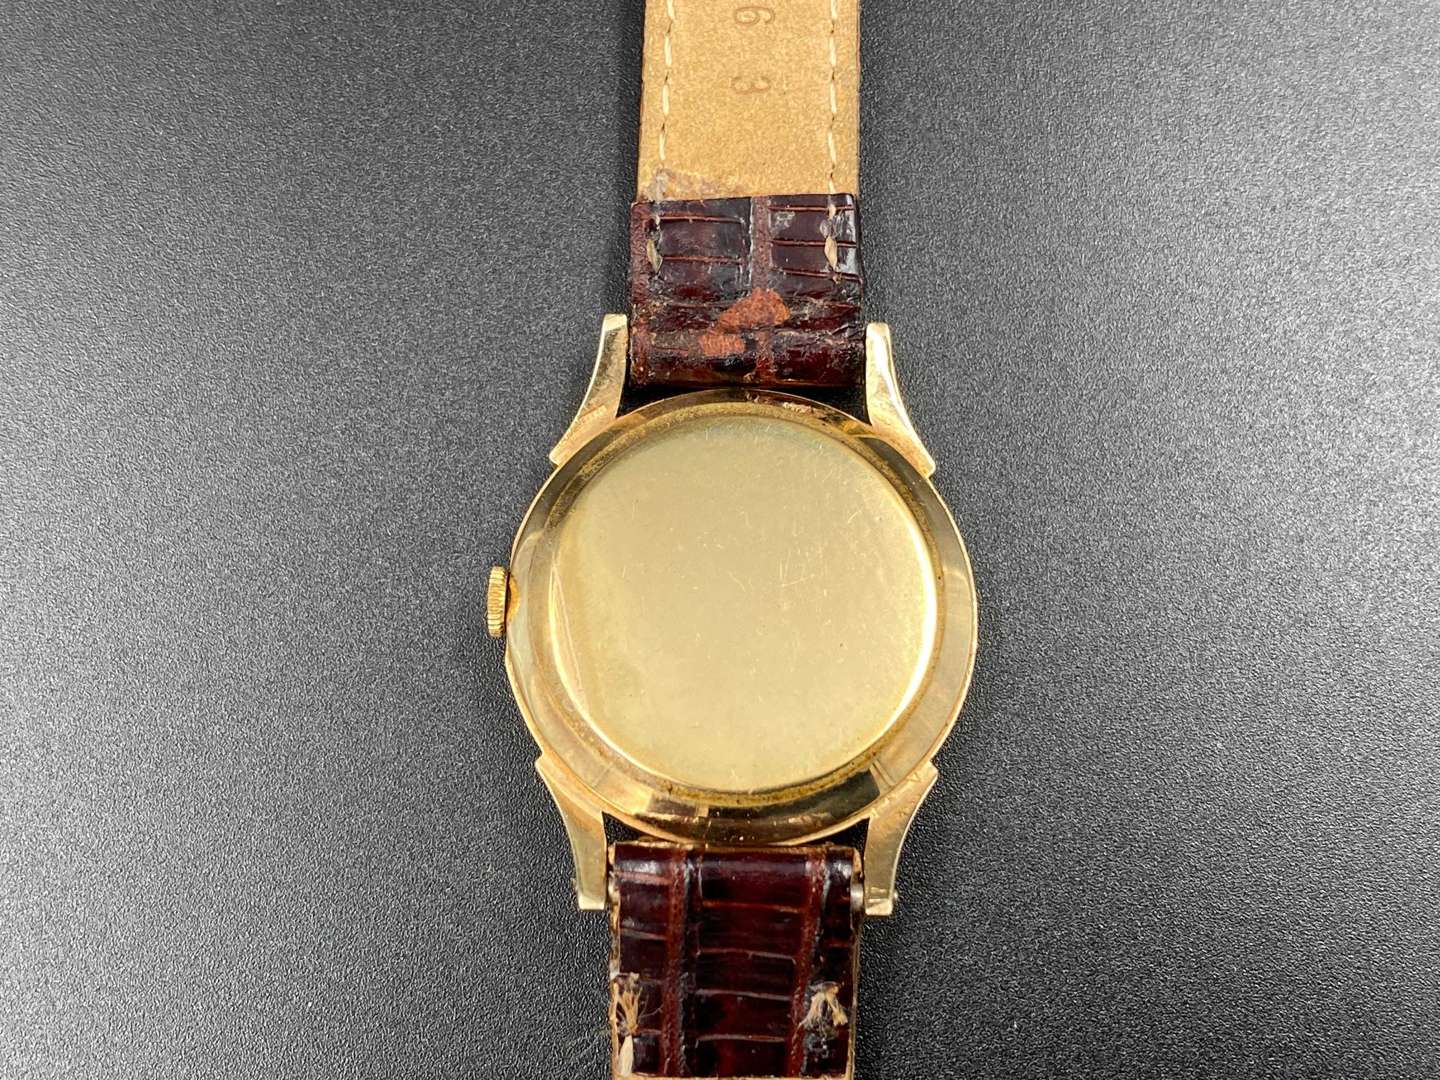 <p>ROLEX, “Precision”, mid 20th century 9ct gold wristwatch</p>